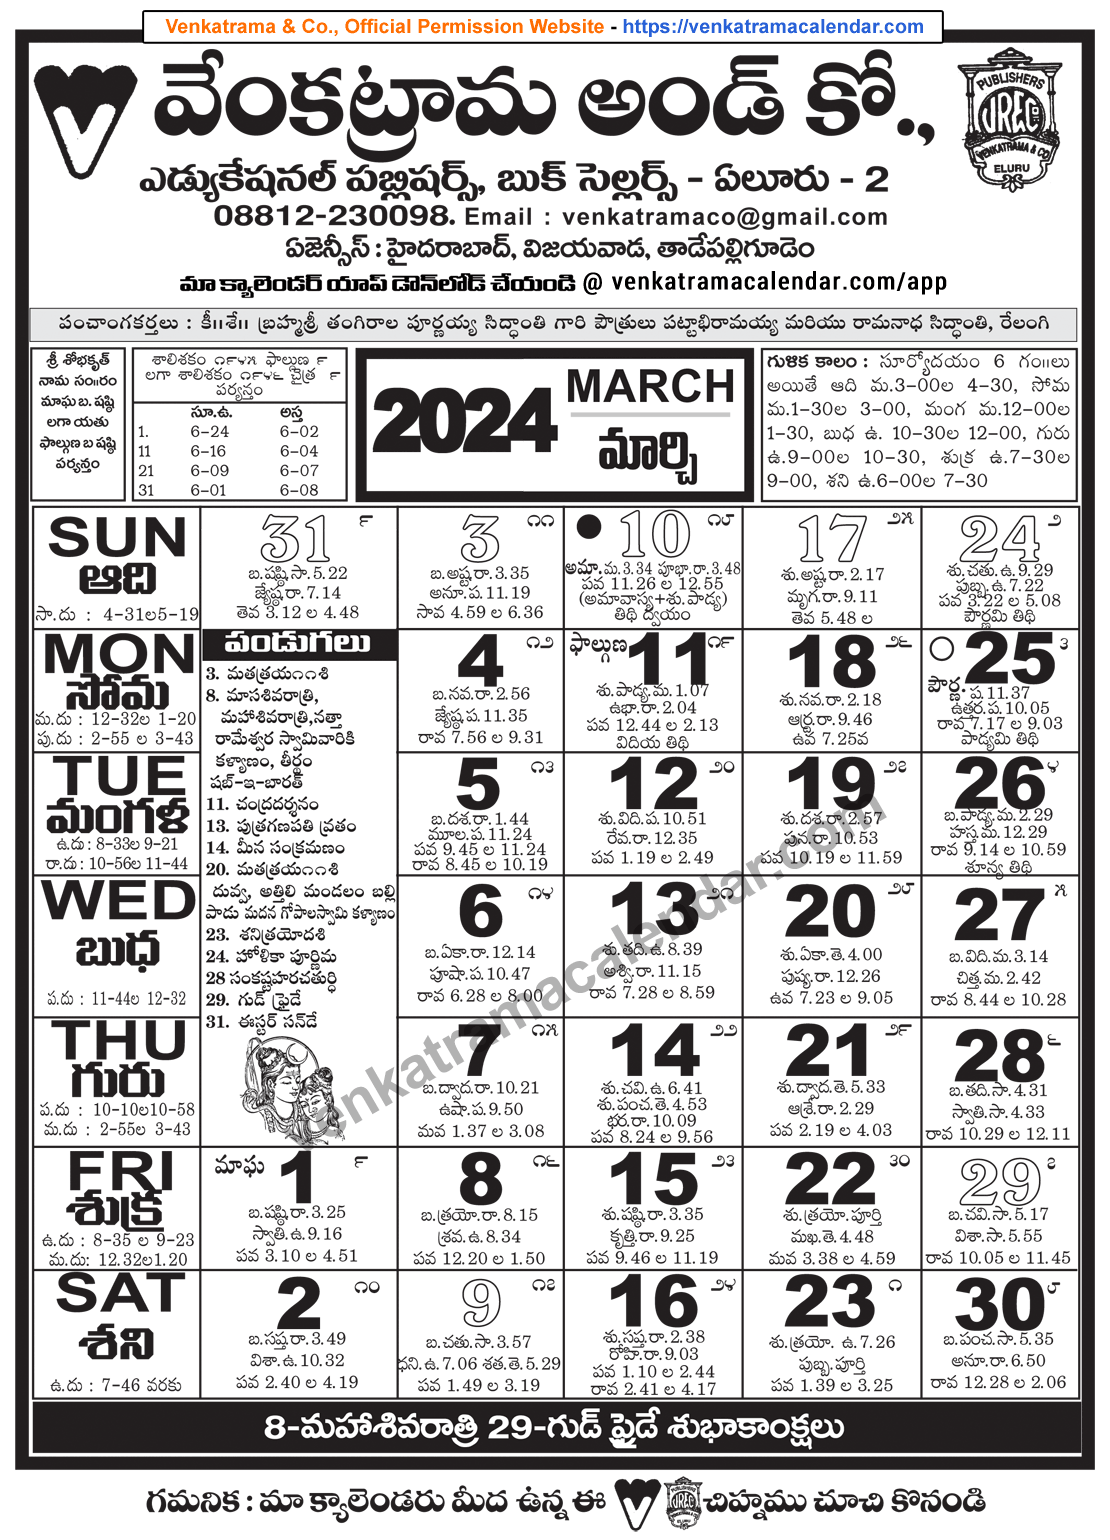 Venkatrama Telugu Calendar 2024 March Venkatrama Telugu Calendar 2024